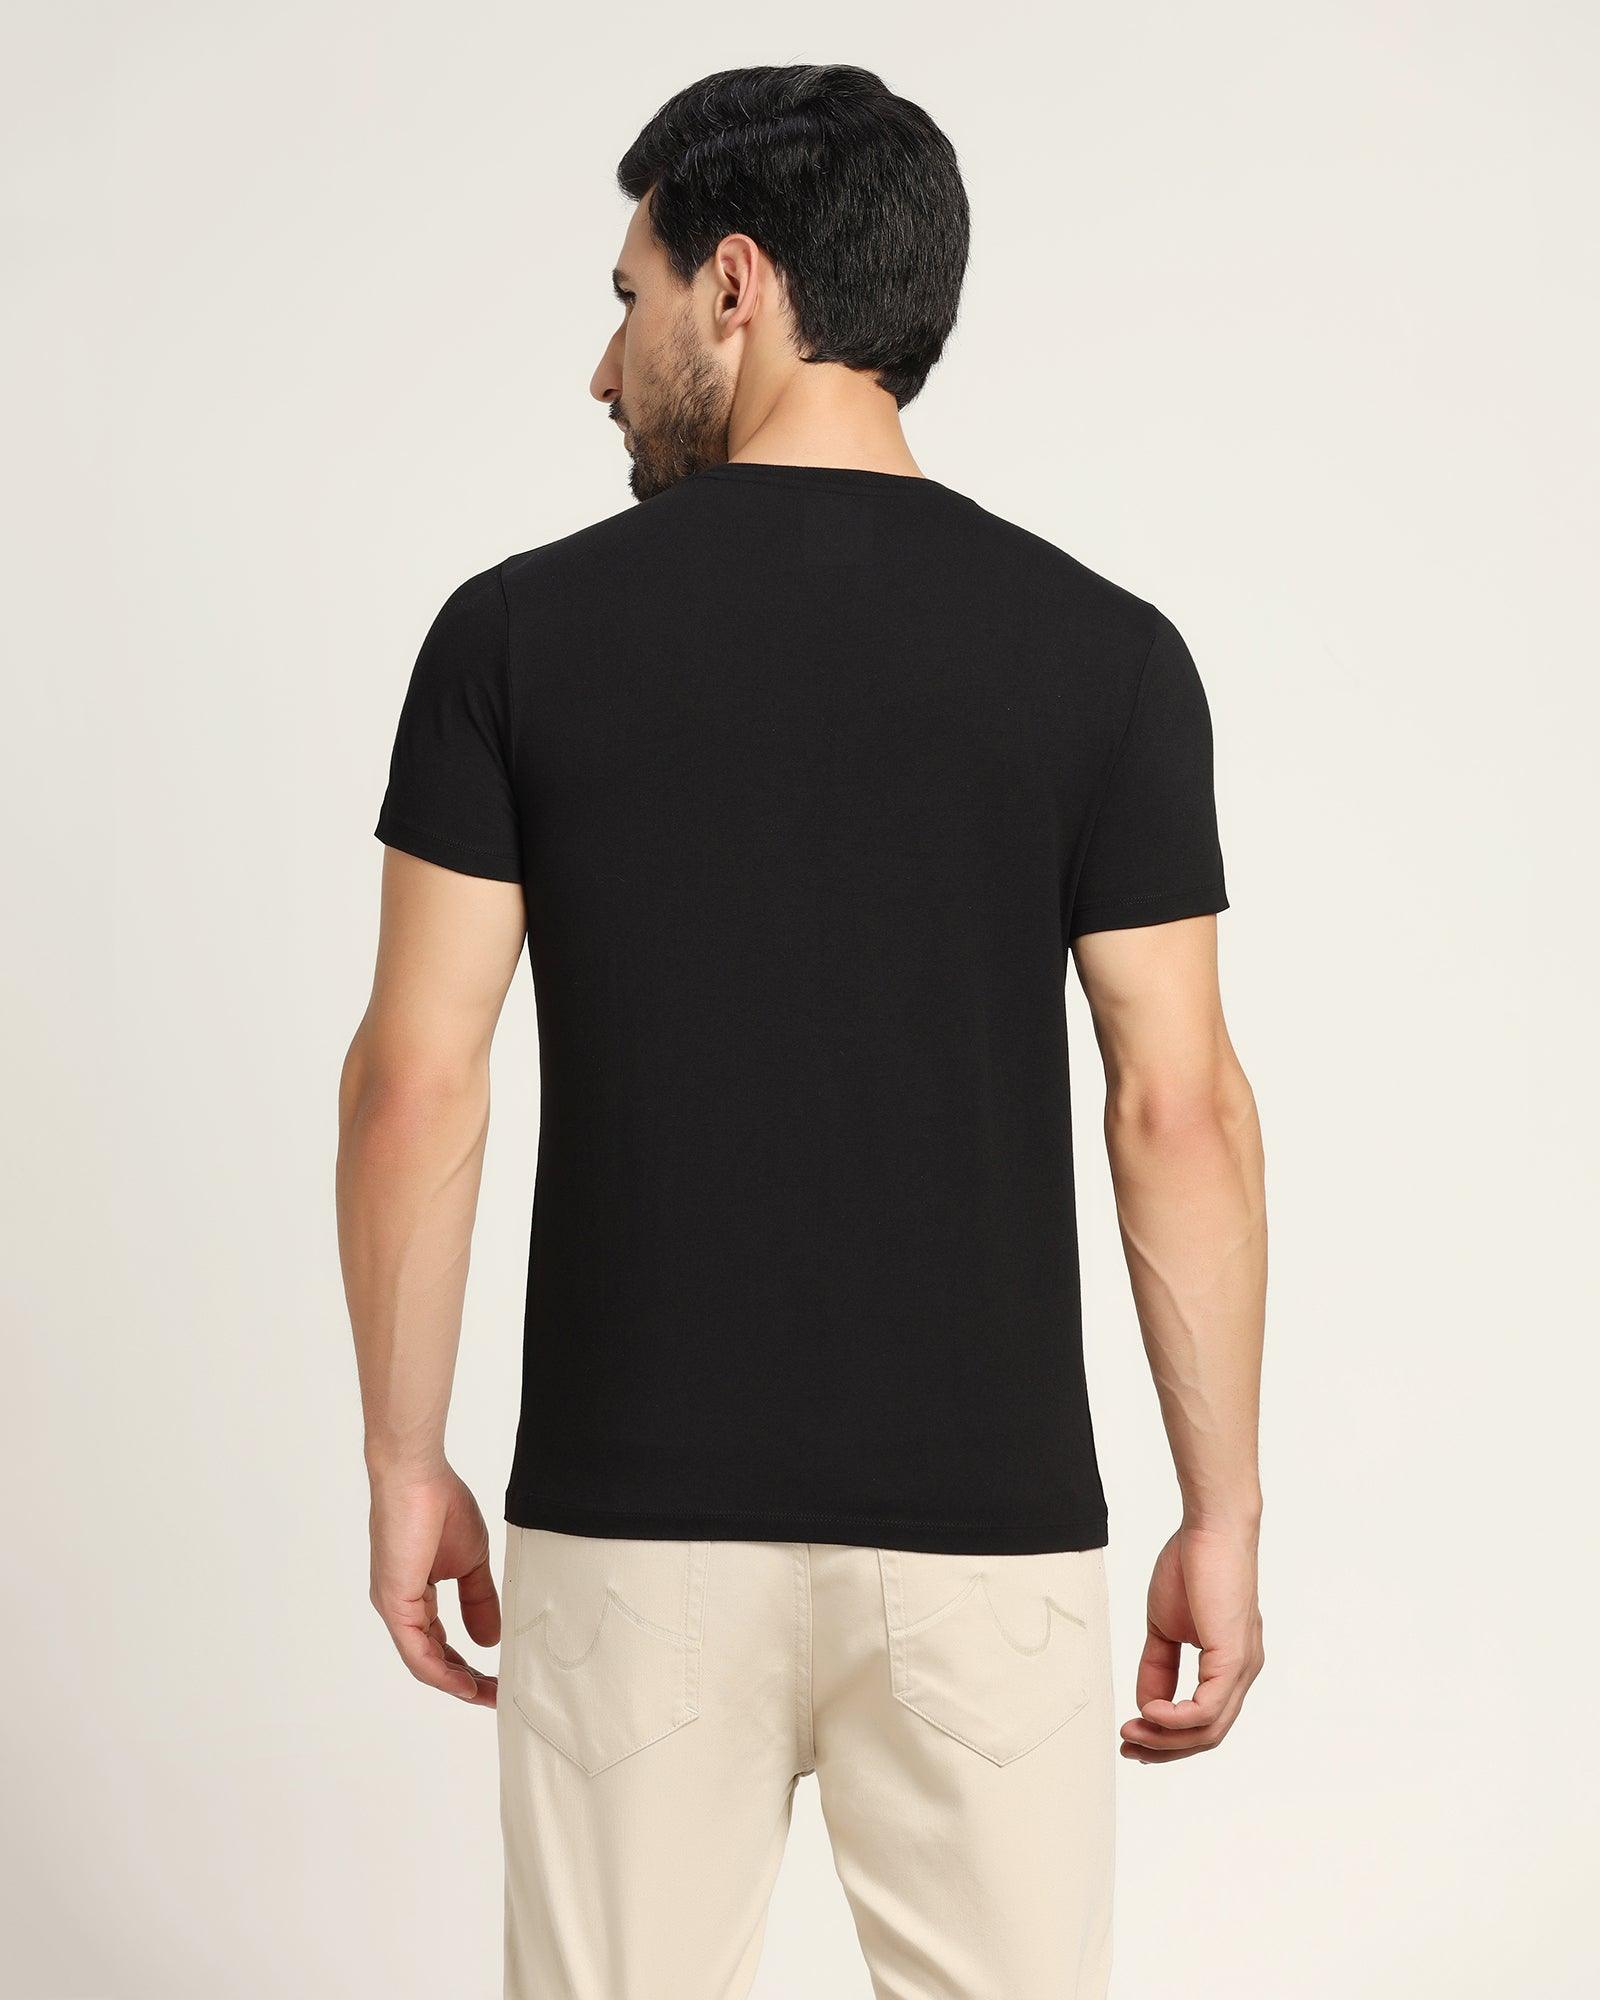 Crew Neck Black Solid T Shirt - Holan